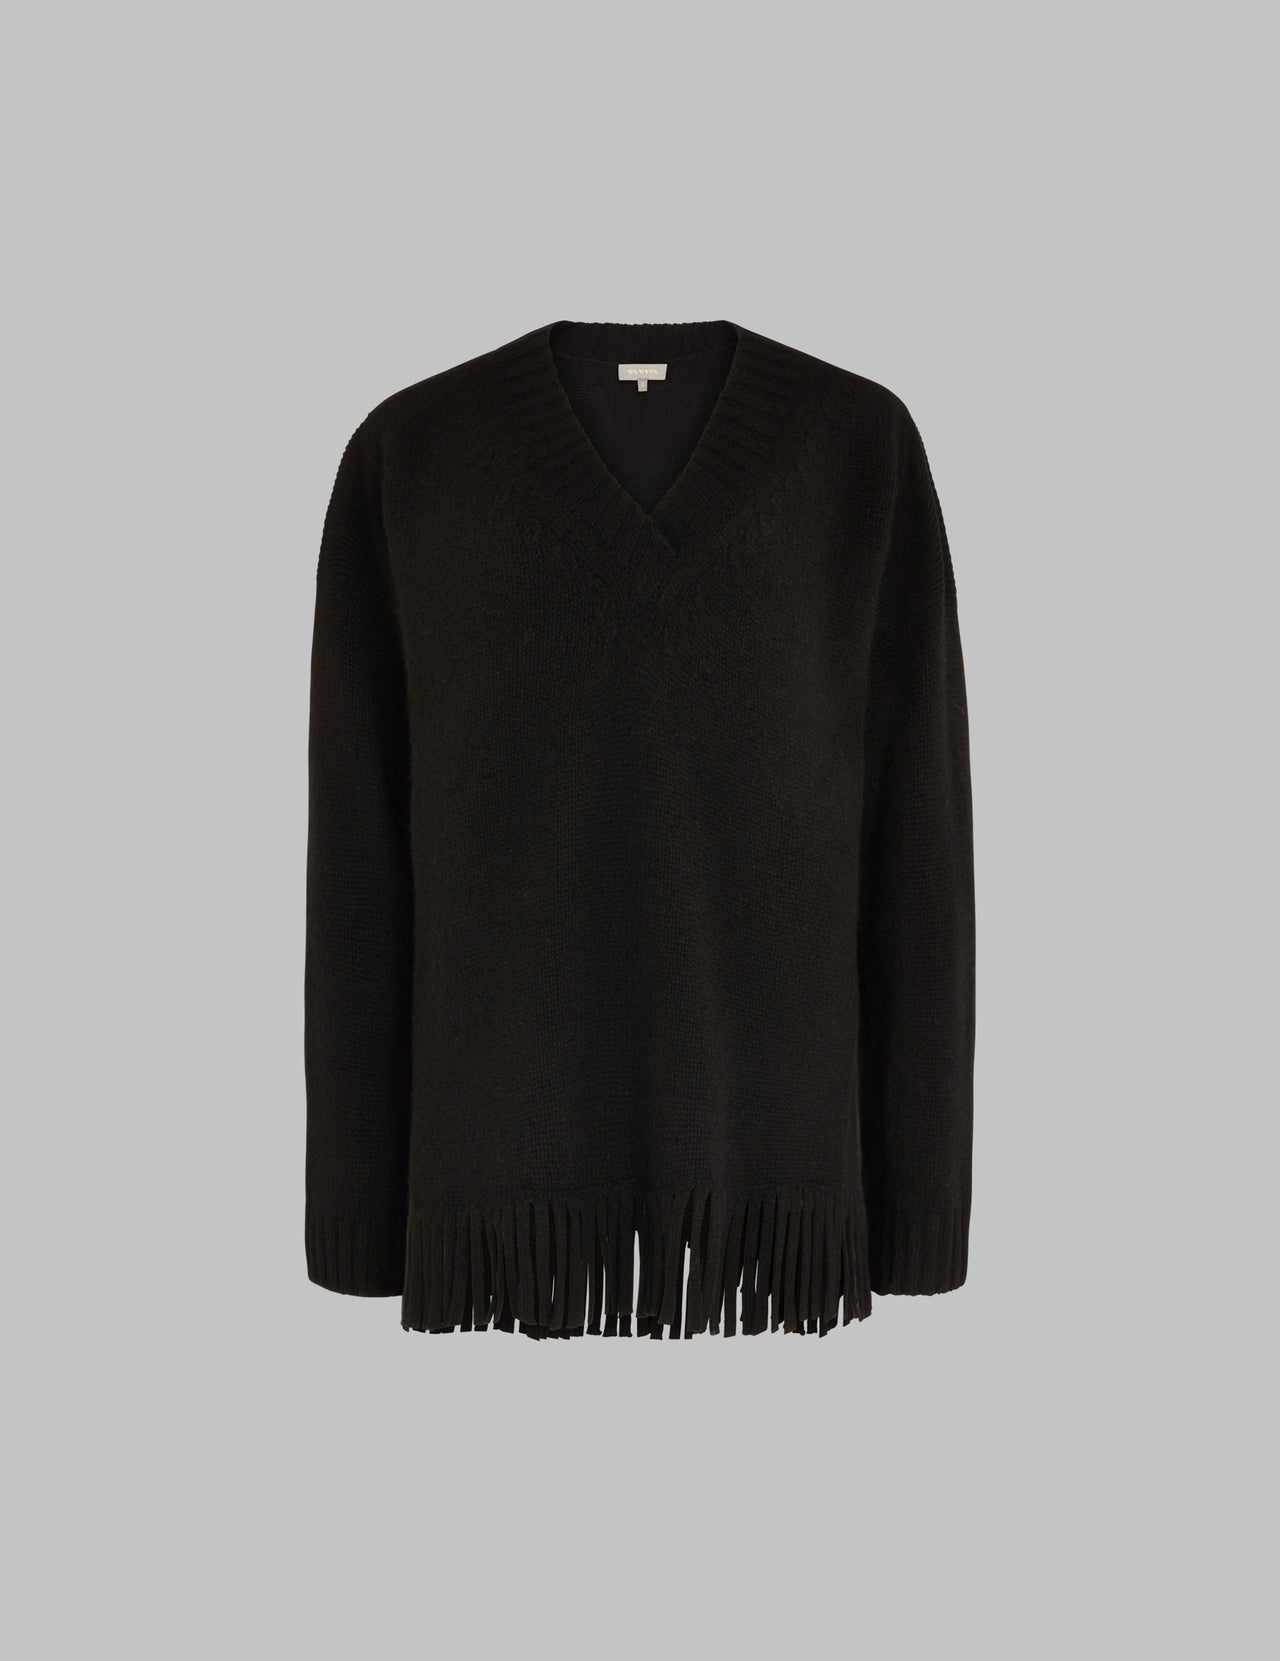  Black V Neck Fringed Cashmere Sweater 